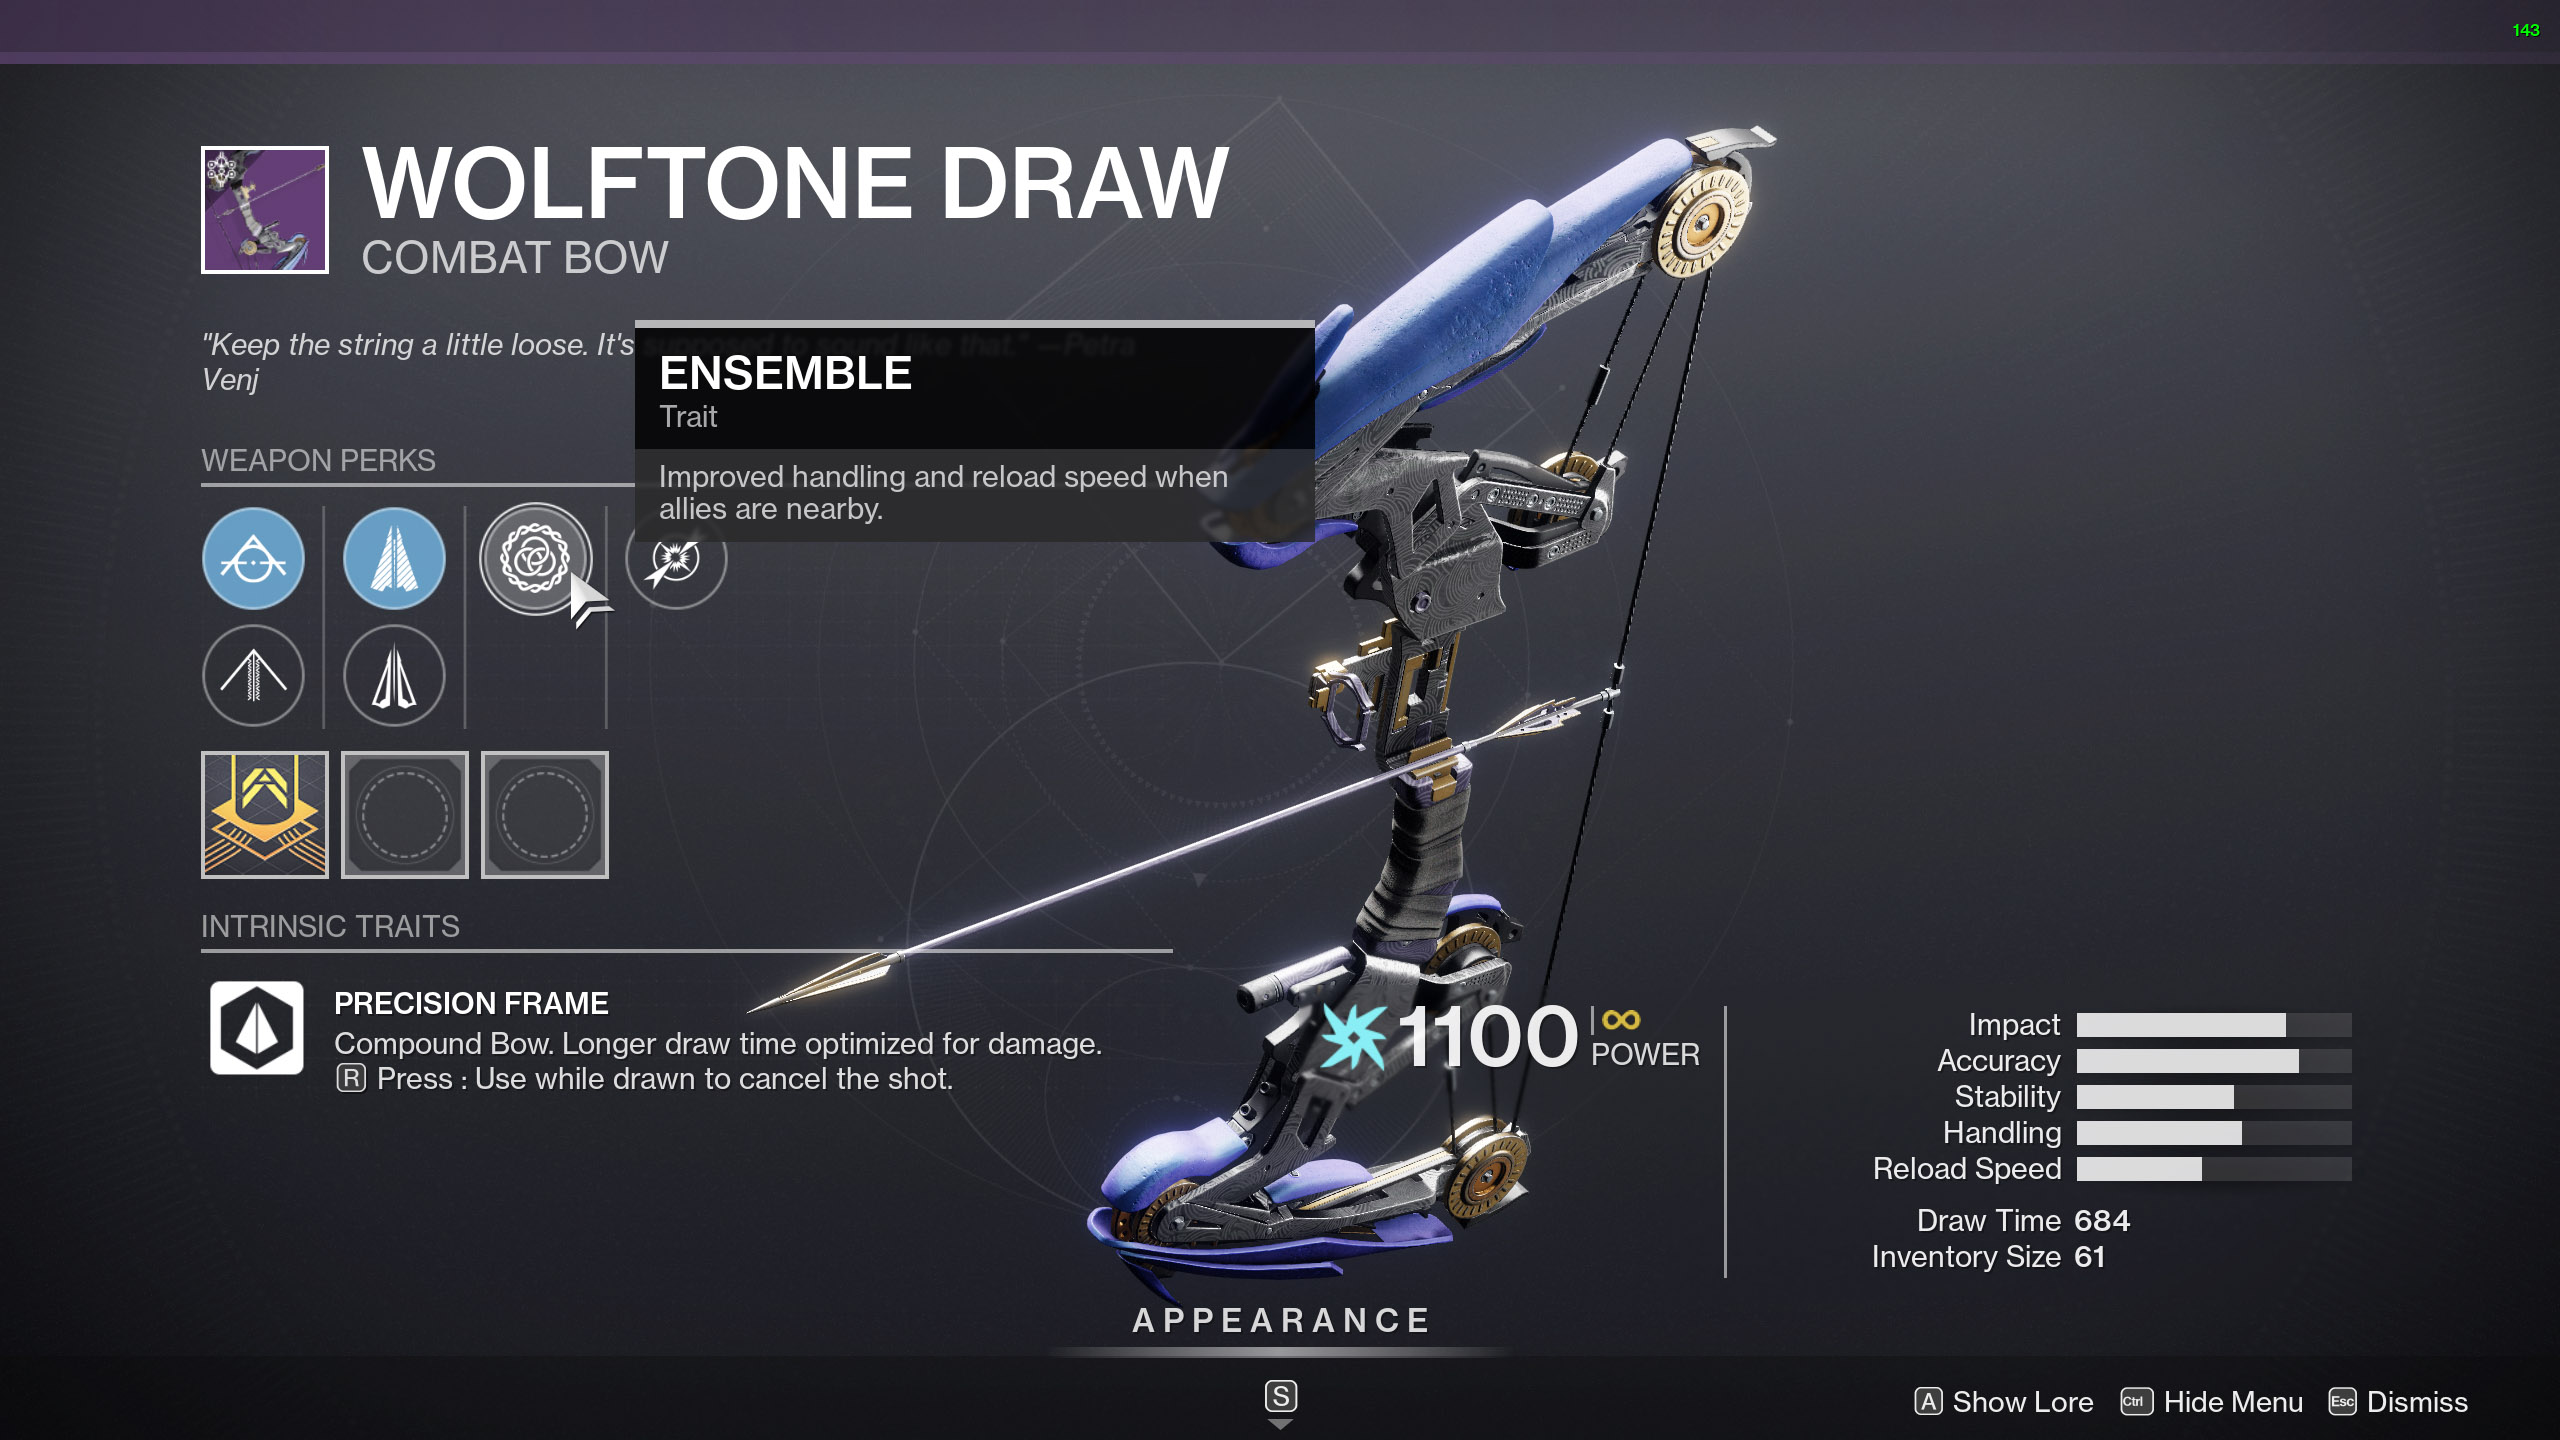 Wolftone Draw - Combat Bow